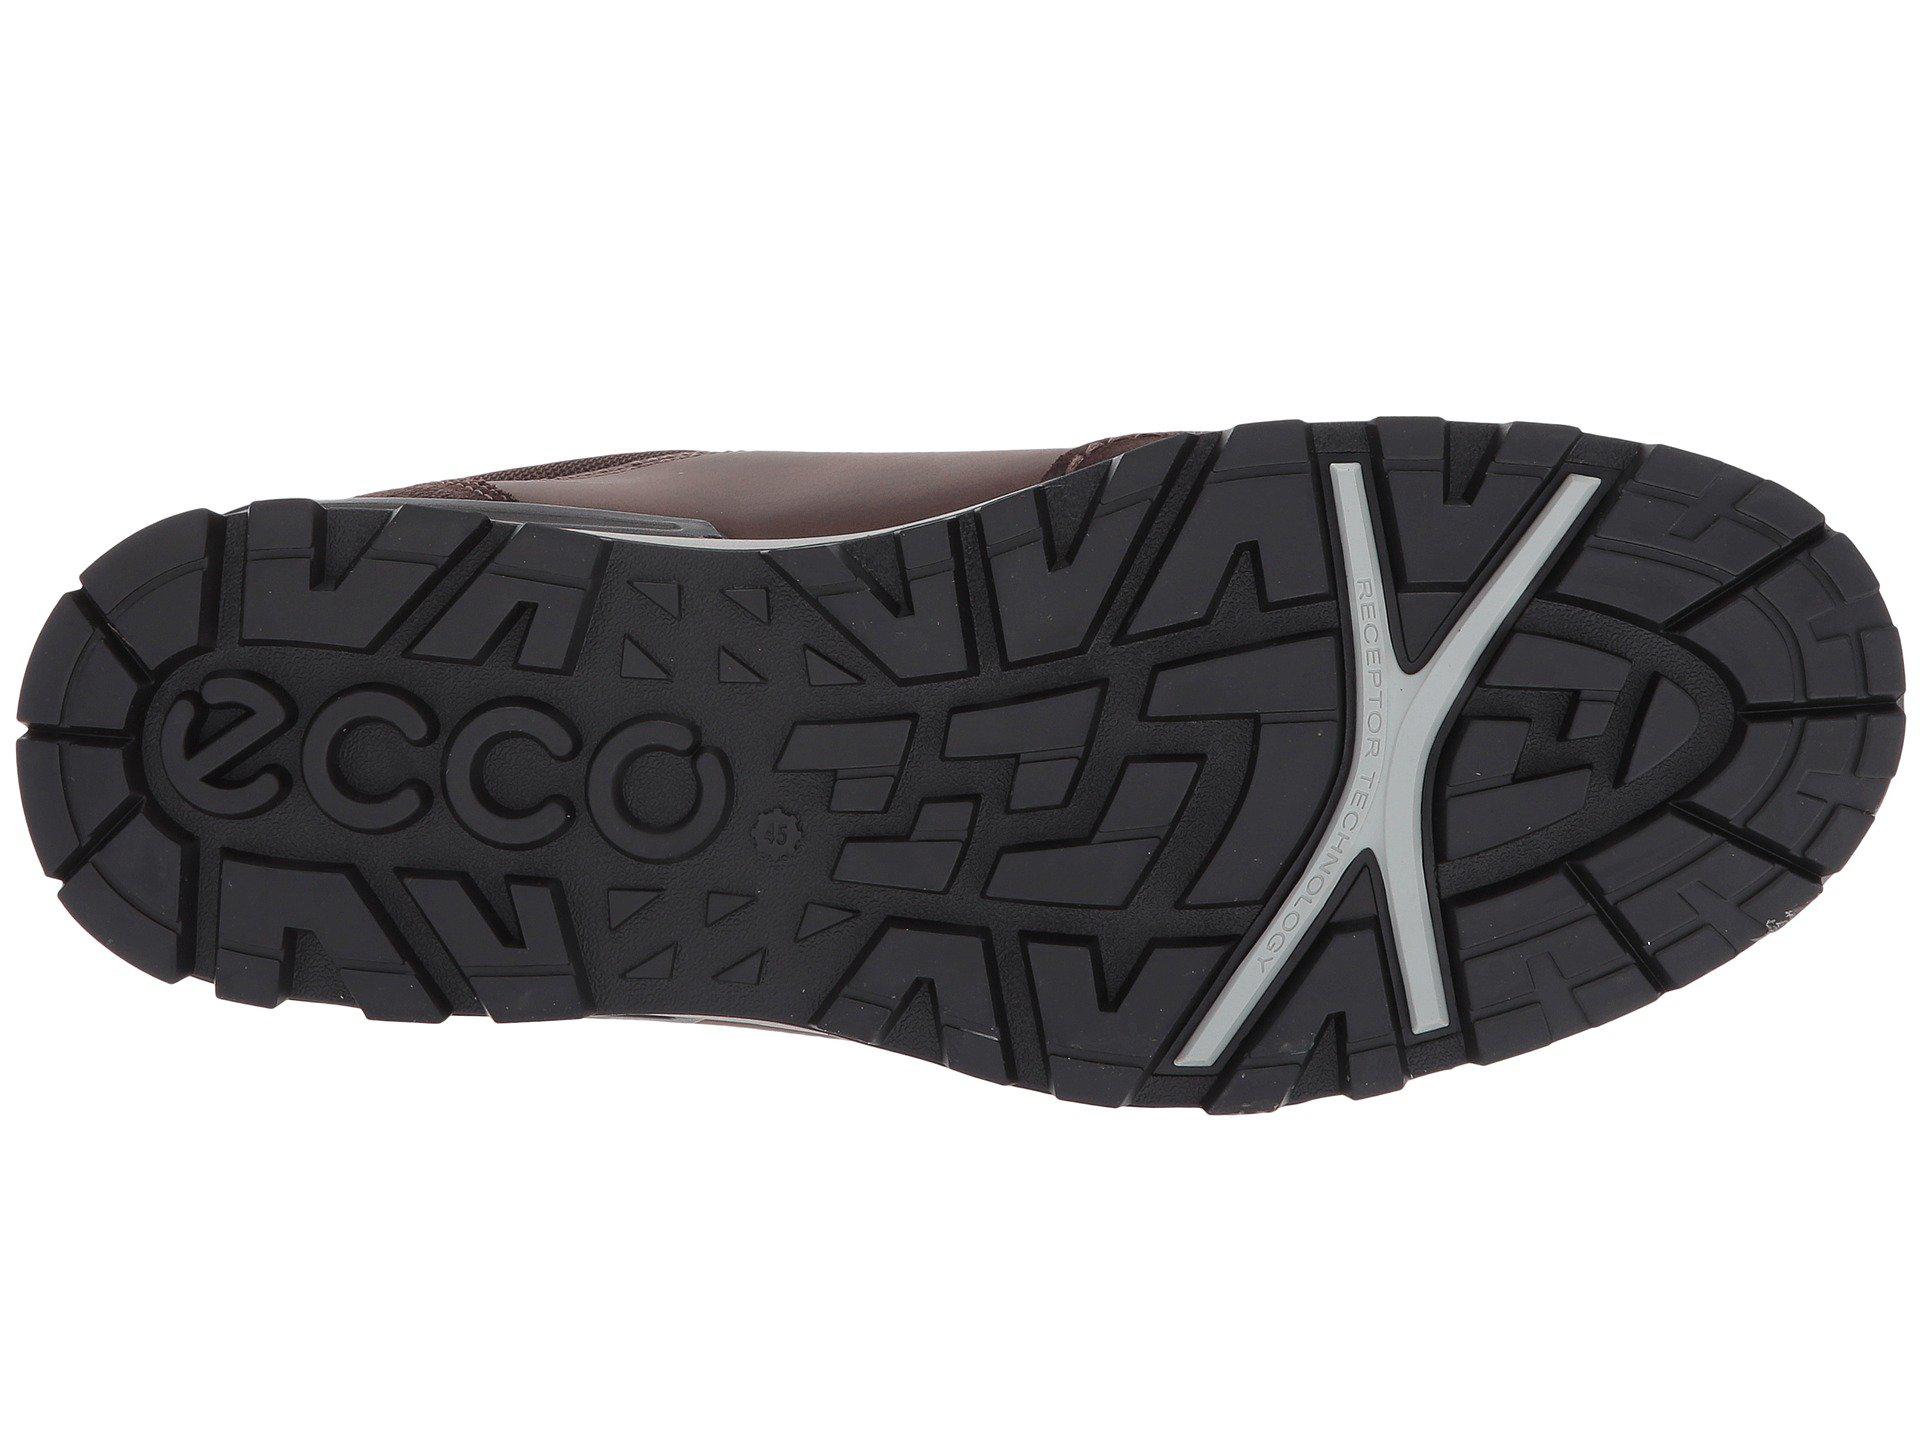 Ecco Leather Oregon Retro Sneaker Hiking Boot for Men - Lyst